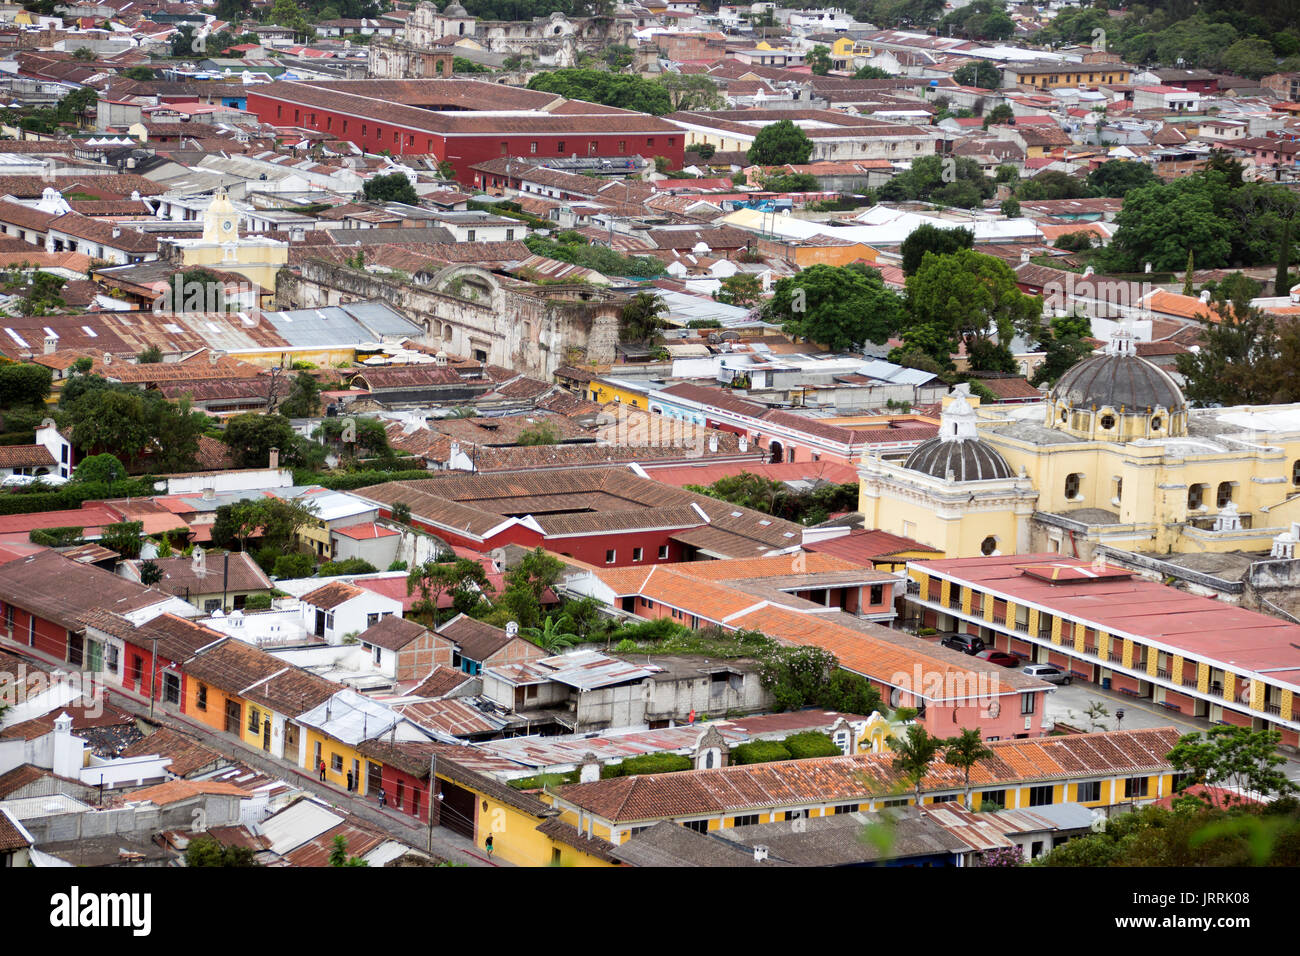 La Antigua Guatemala vista desde arriba del Cerro de la Cruz, se ven techos de teja y la cúpula de la Iglesia n.a. Foto Stock